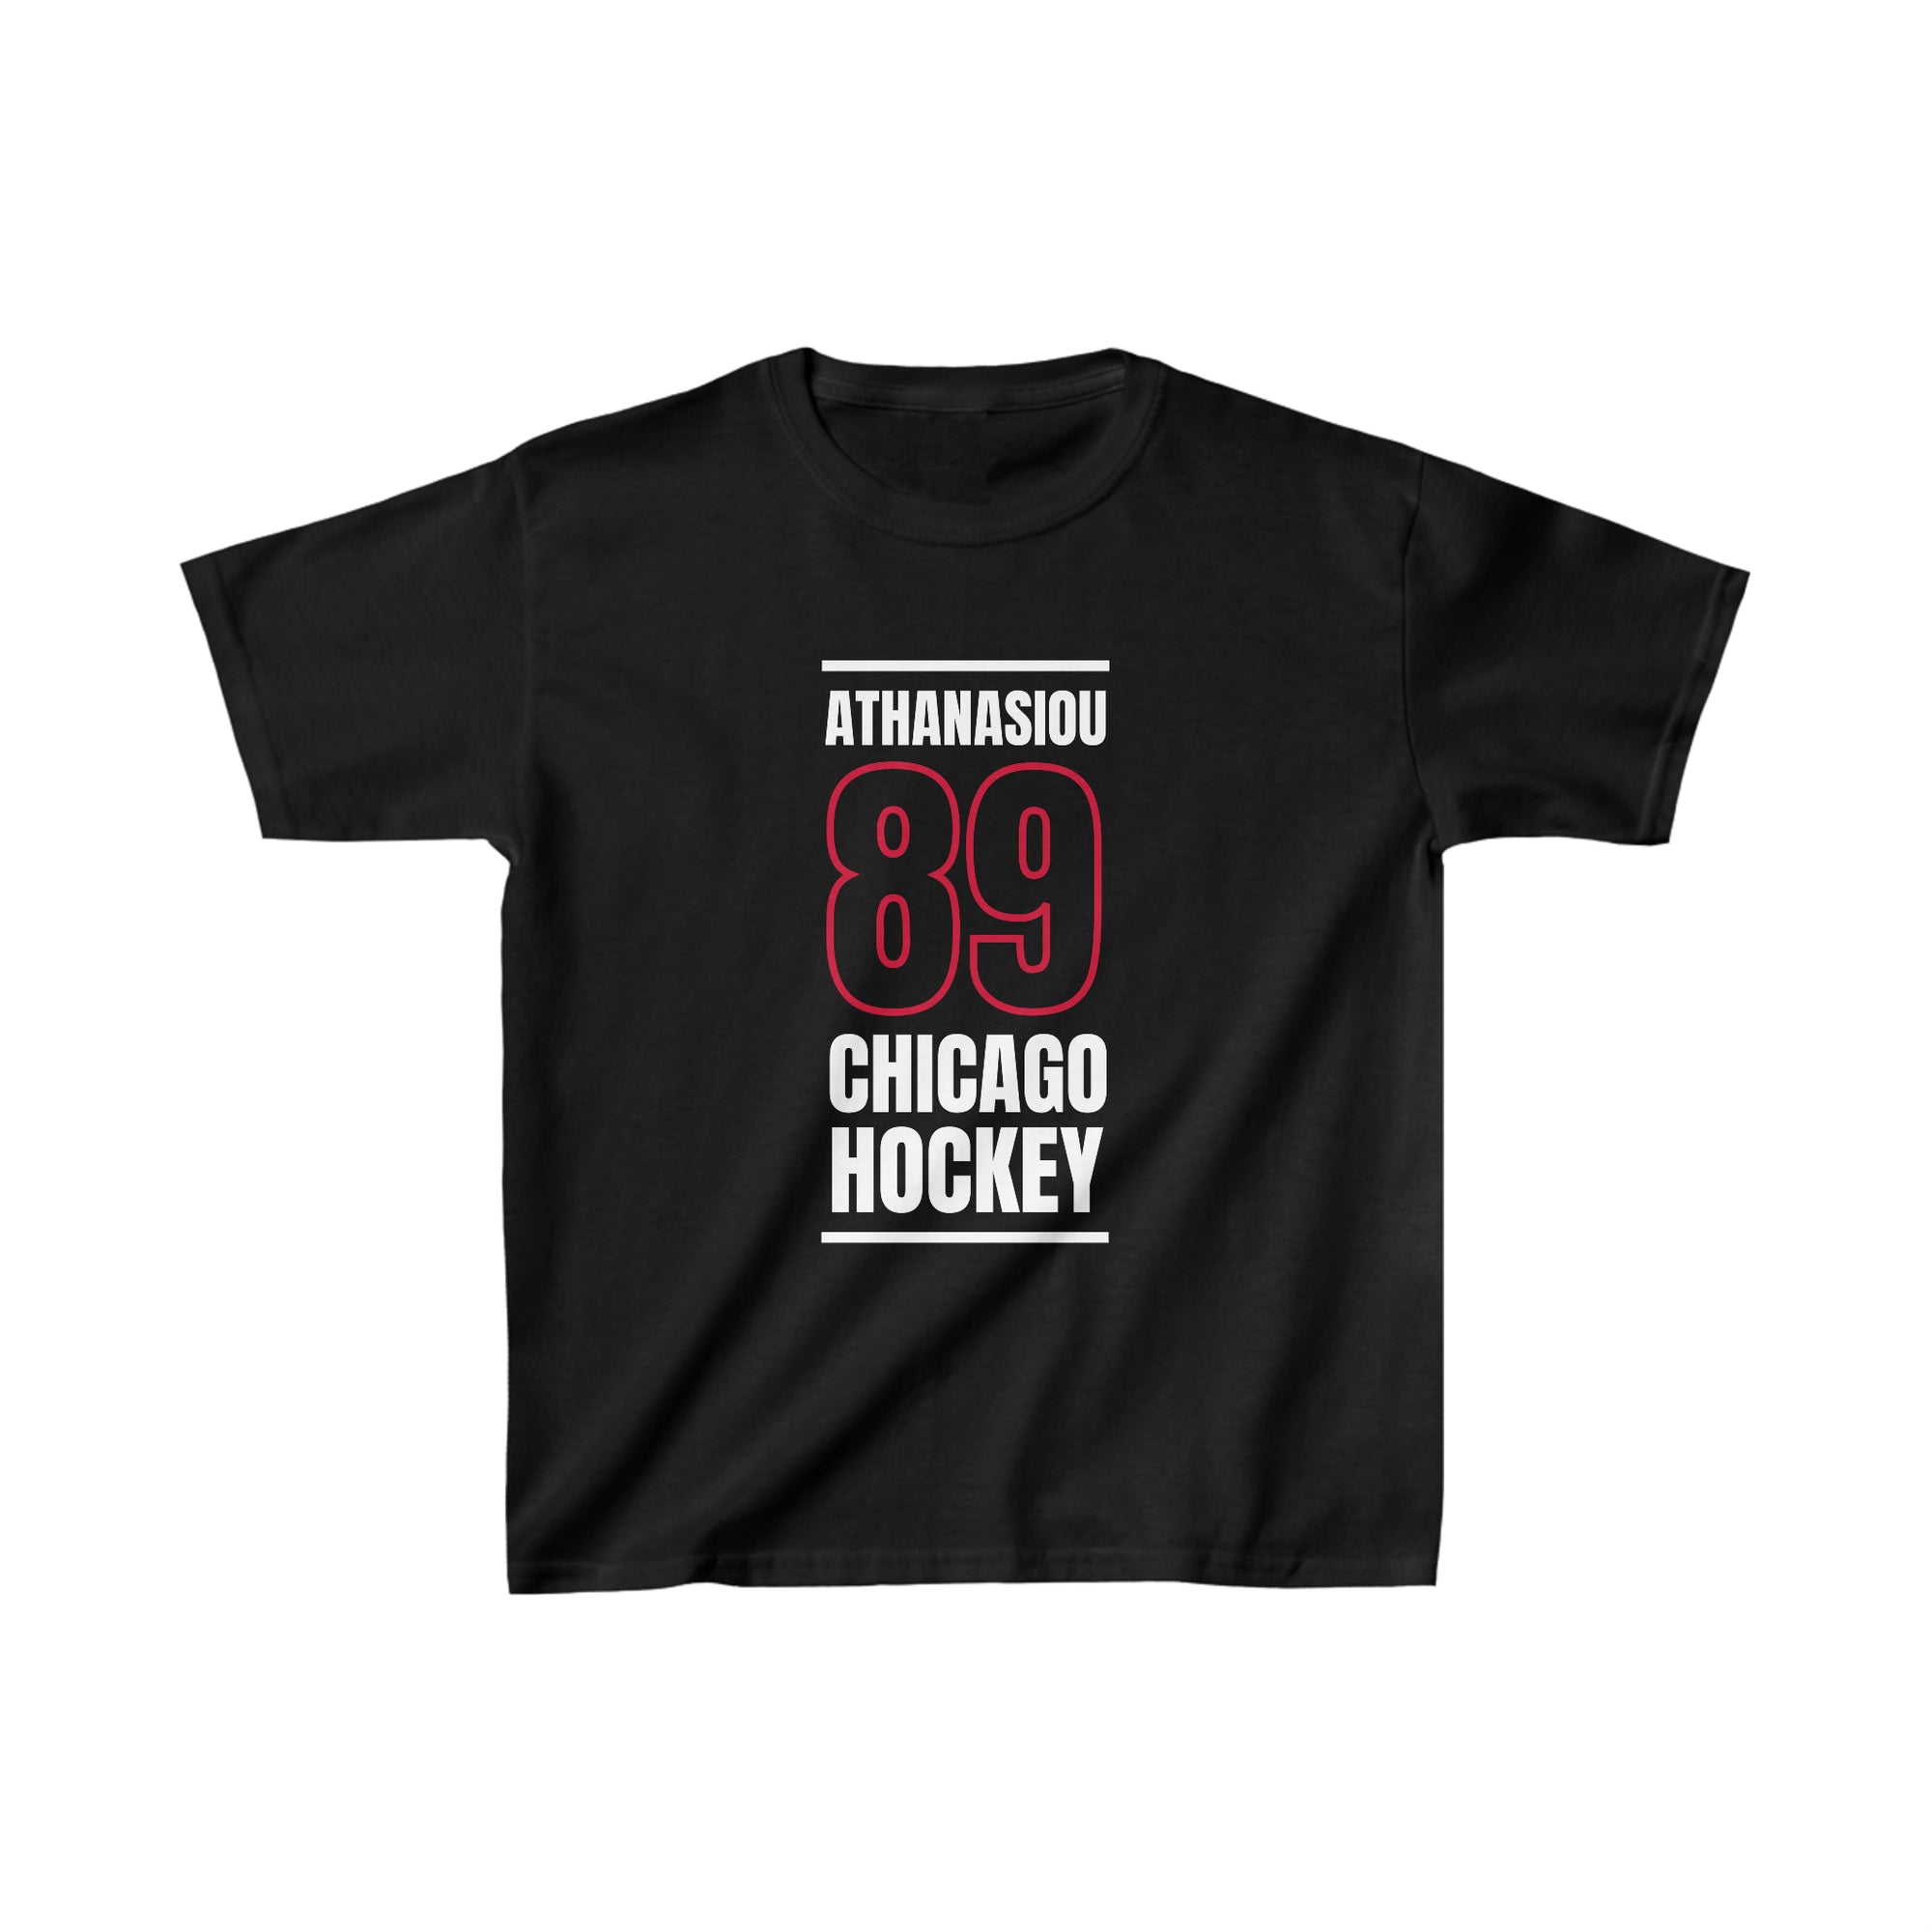 Athanasiou 89 Chicago Hockey Black Vertical Design Kids Tee